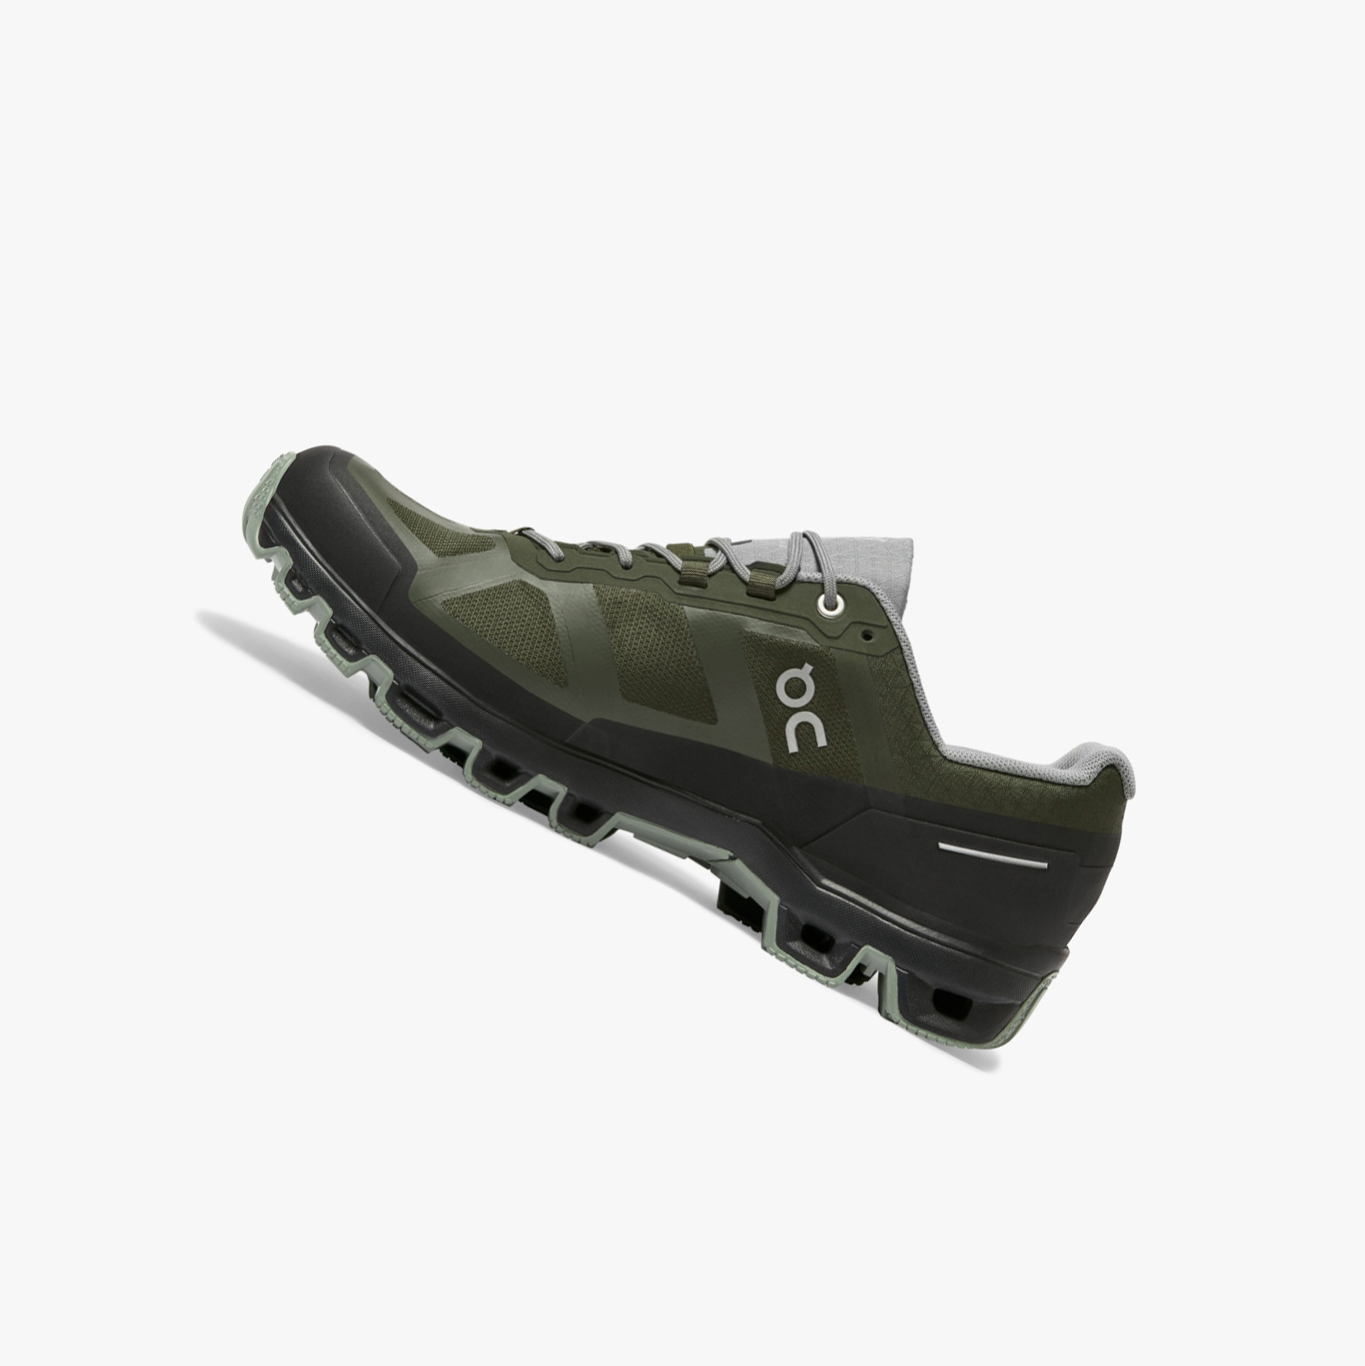 Green QC Cloudventure Waterproof Men's Trail Running Shoes | 0000014CA